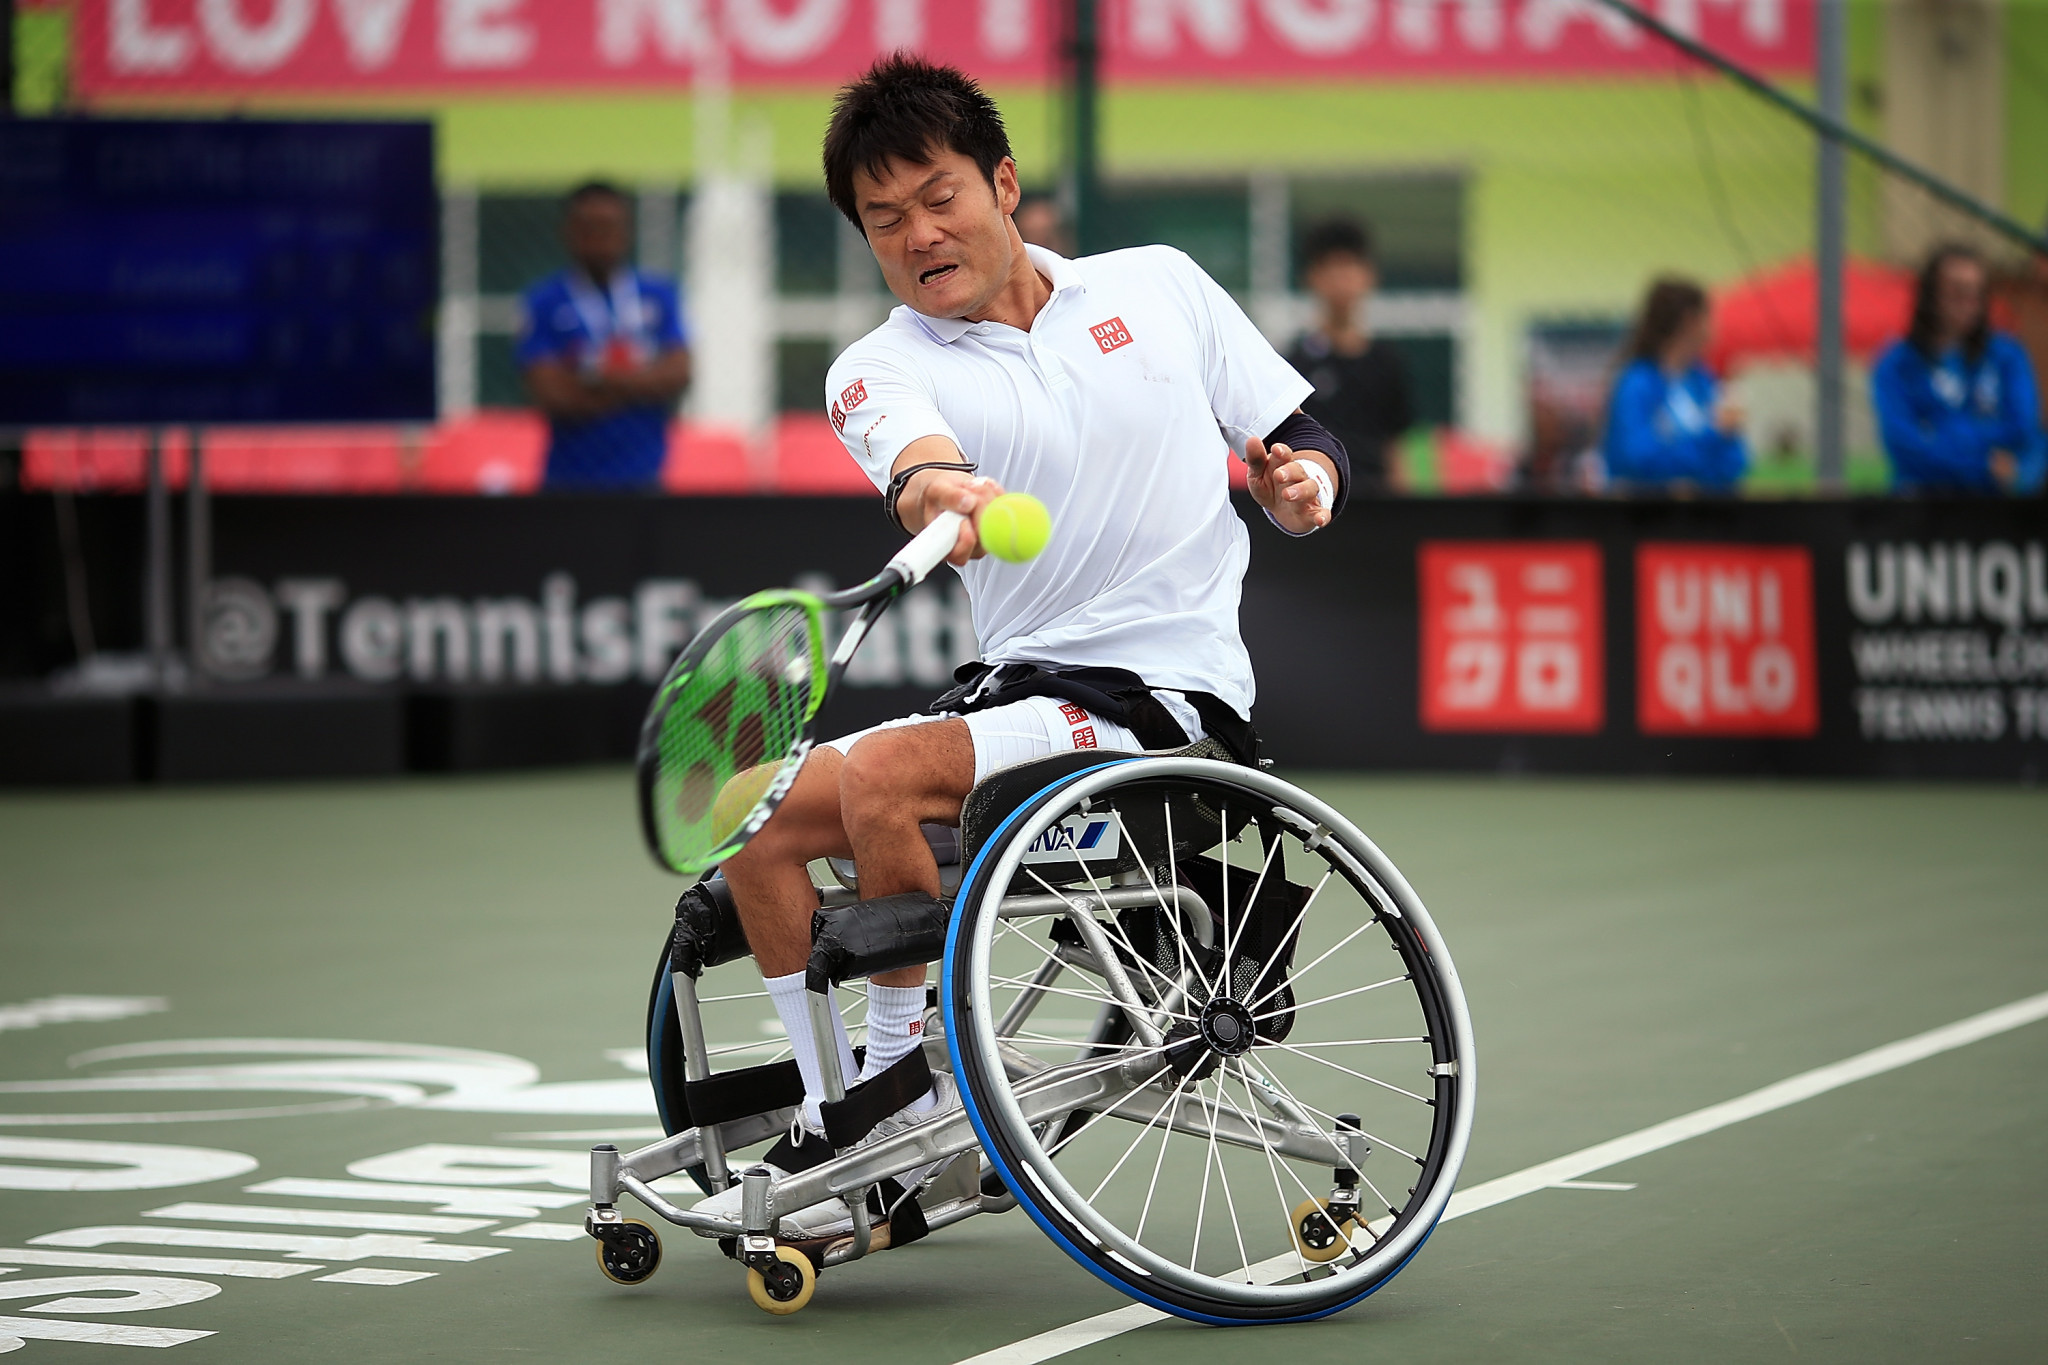 Kunieda to begin Australian Open wheelchair title defence against Hewett in repeat of US Open final